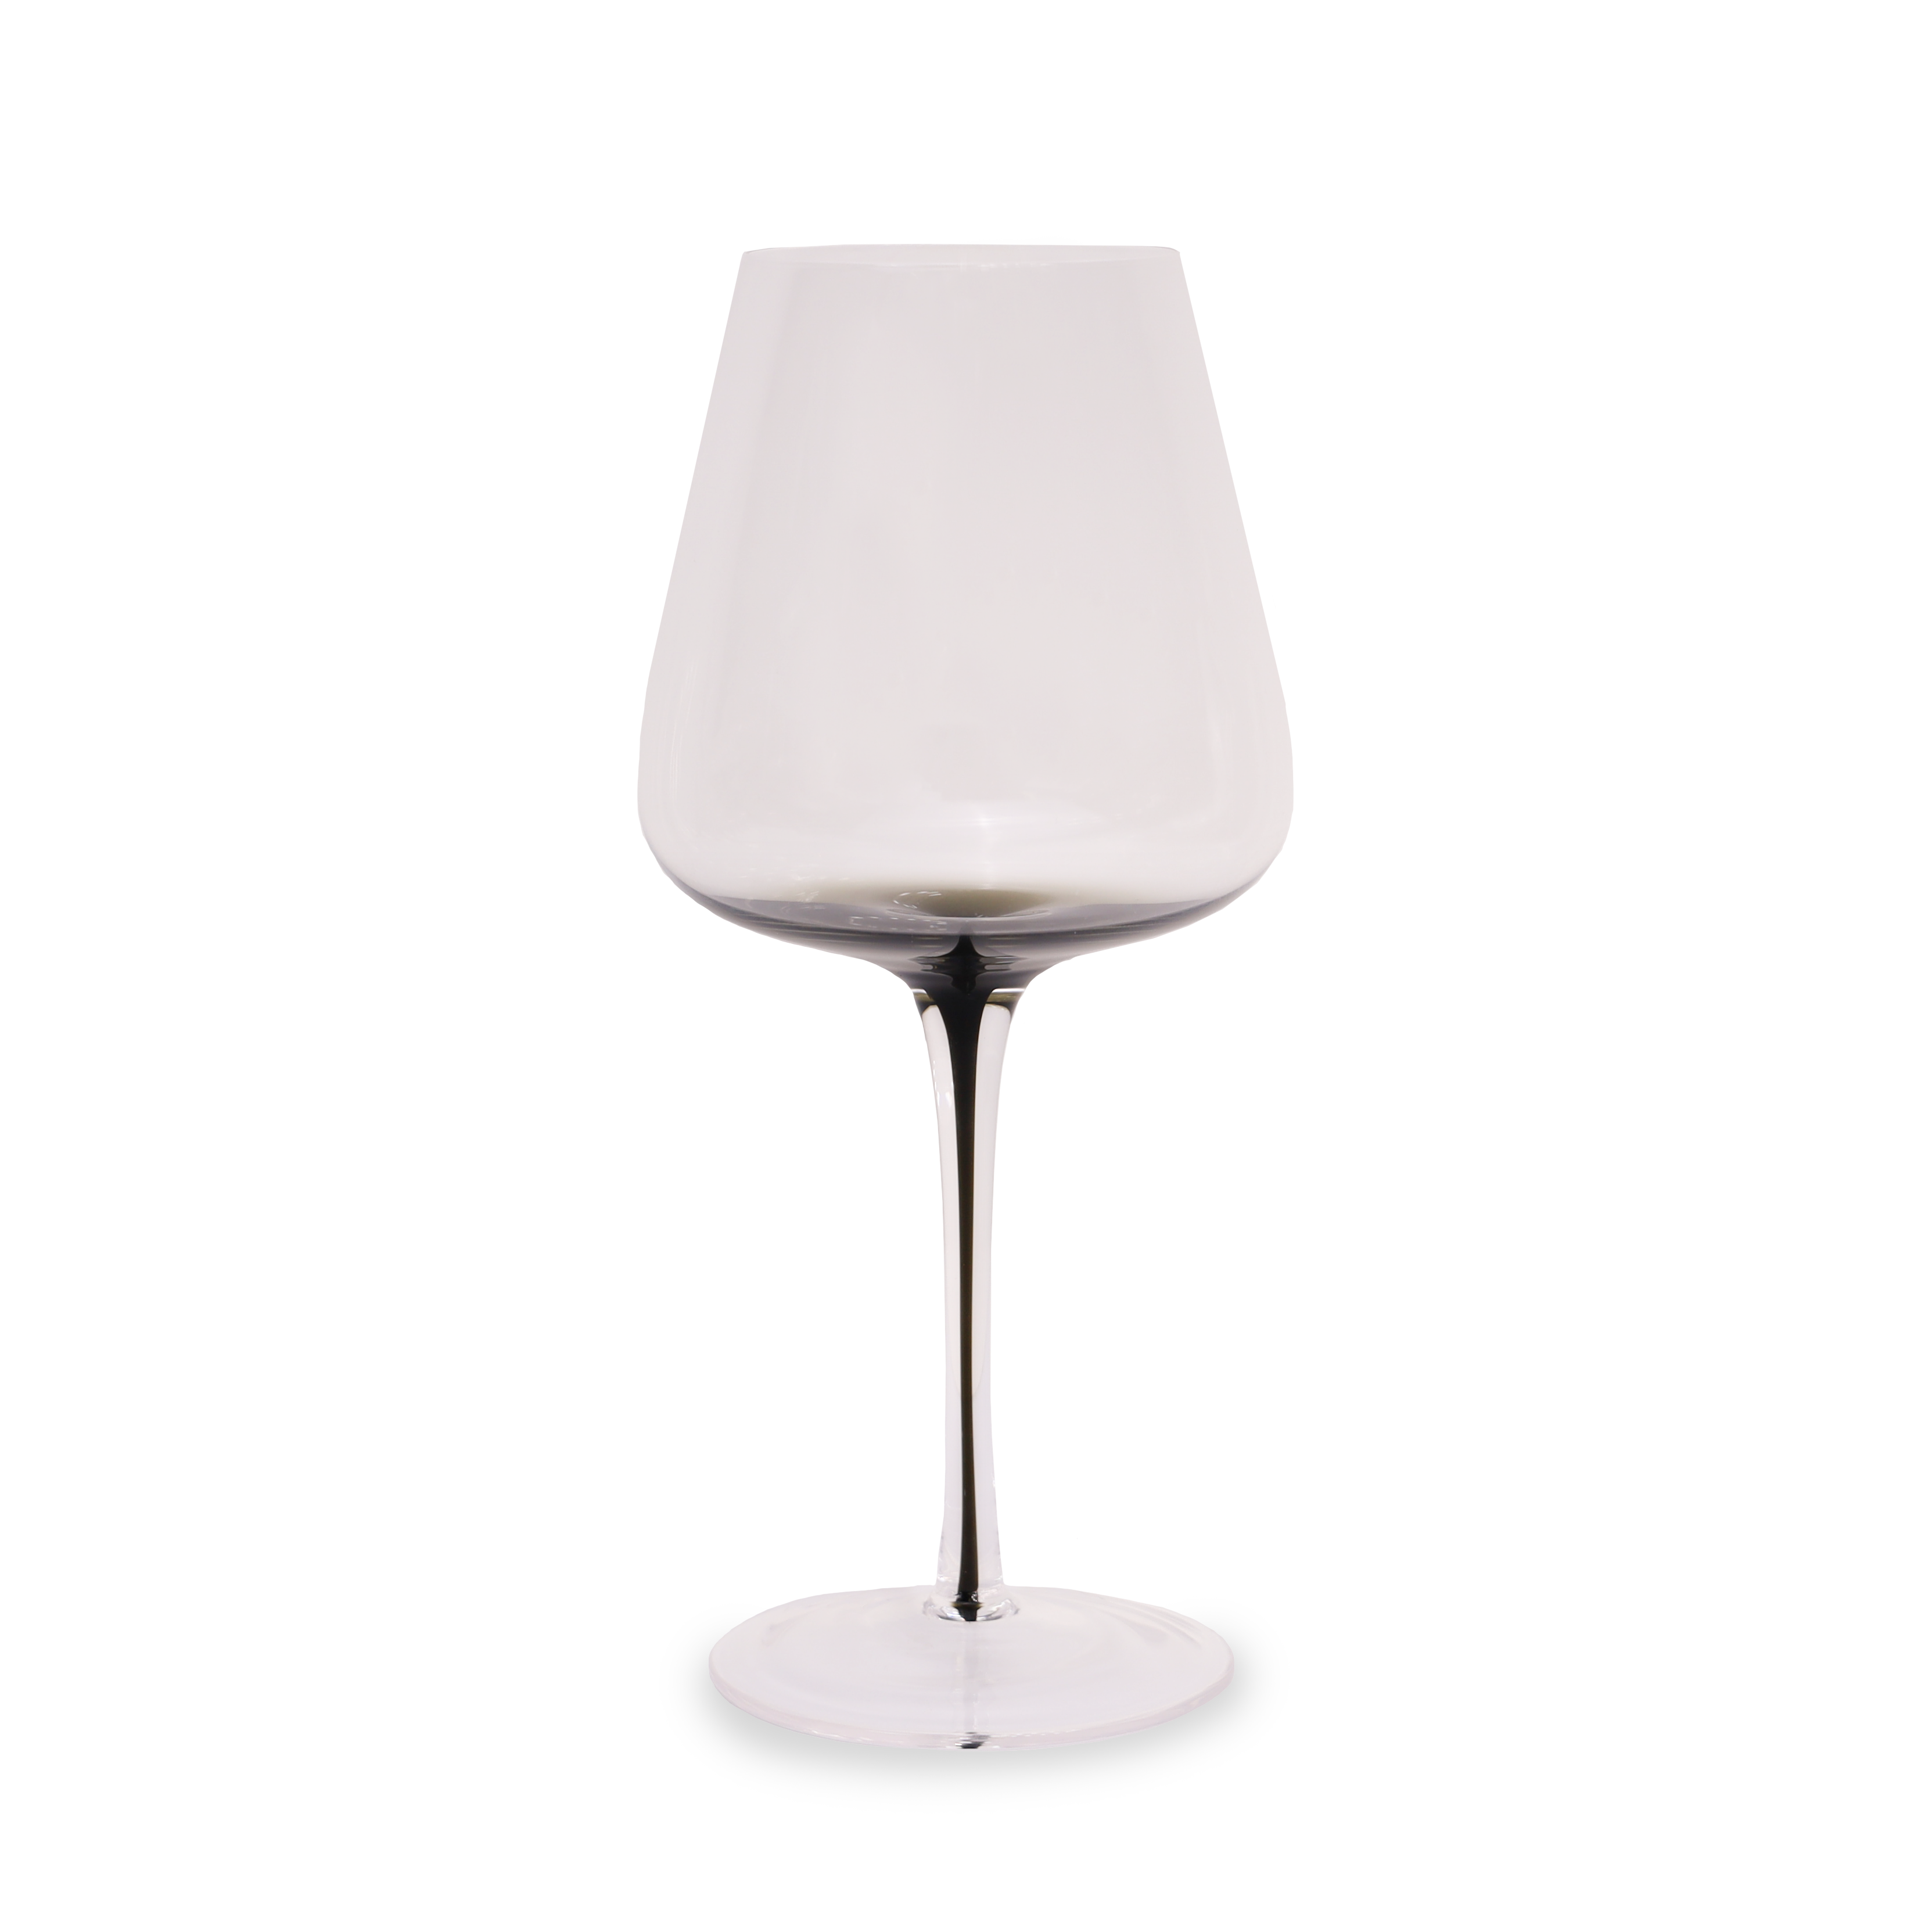 Smoke Stem White Wine Glasses (Set of 4) Hotel Collection